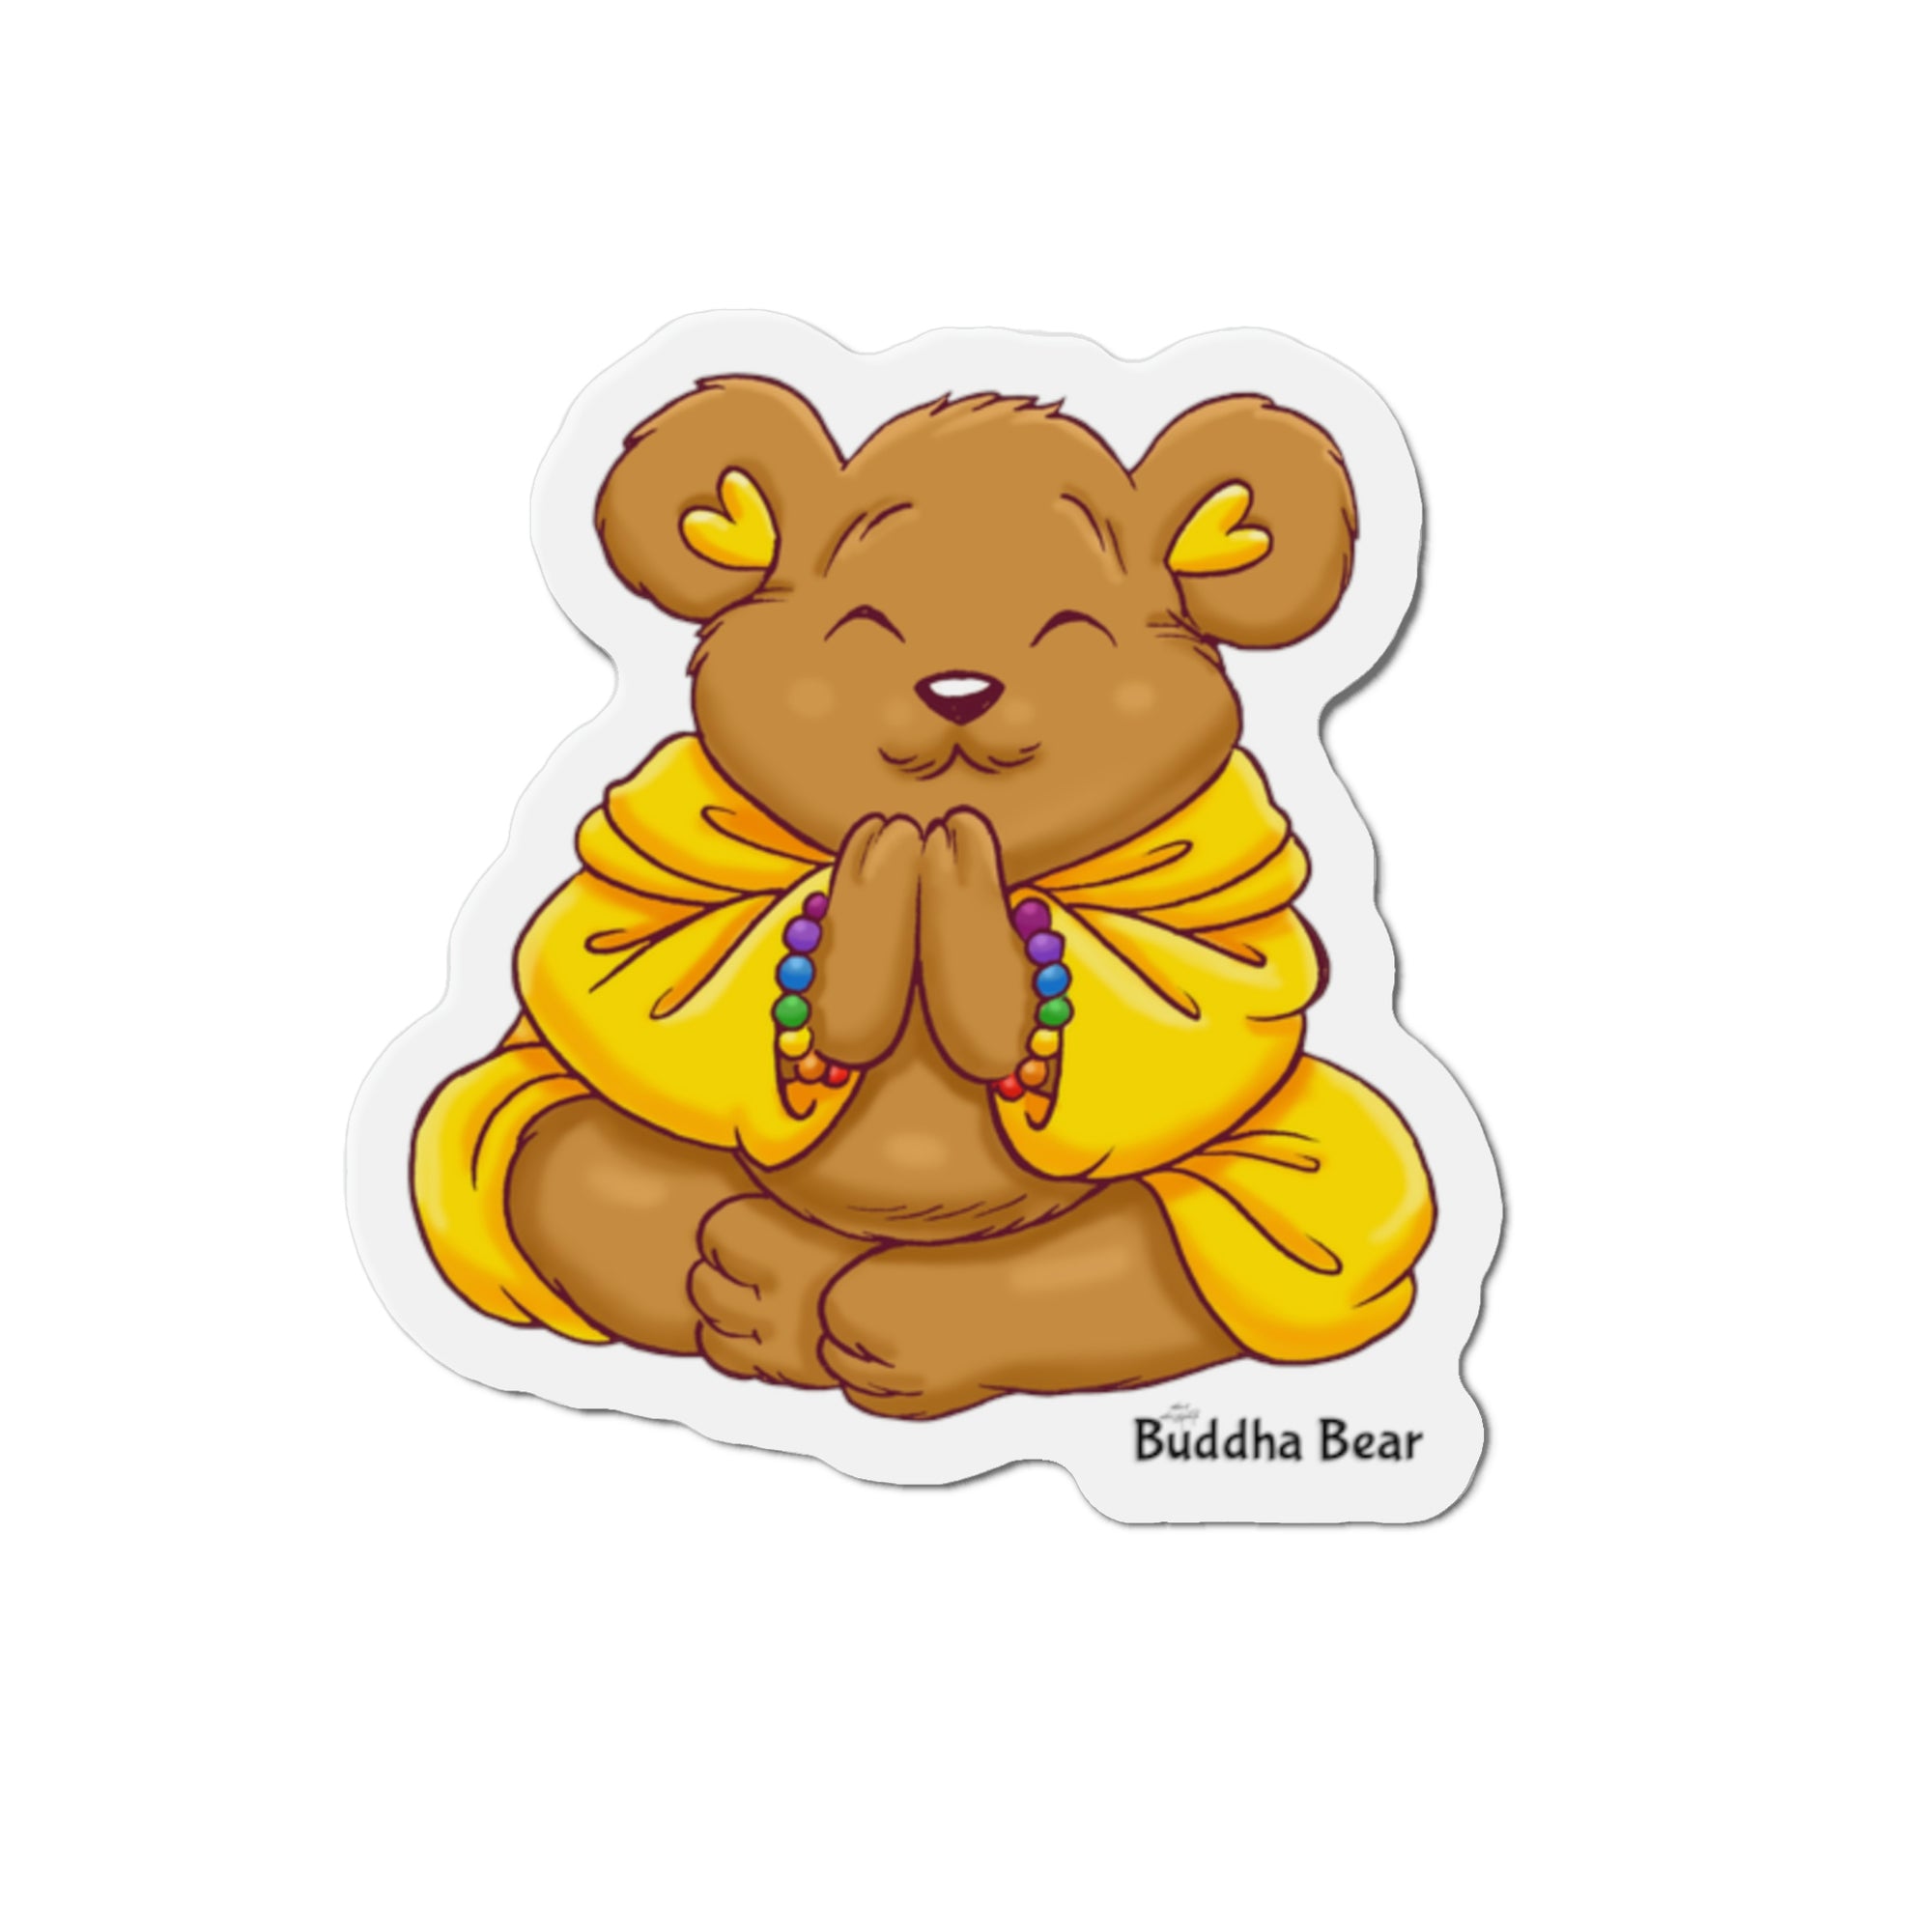 Buddha Bear's Fridge Reminder Magnet #2